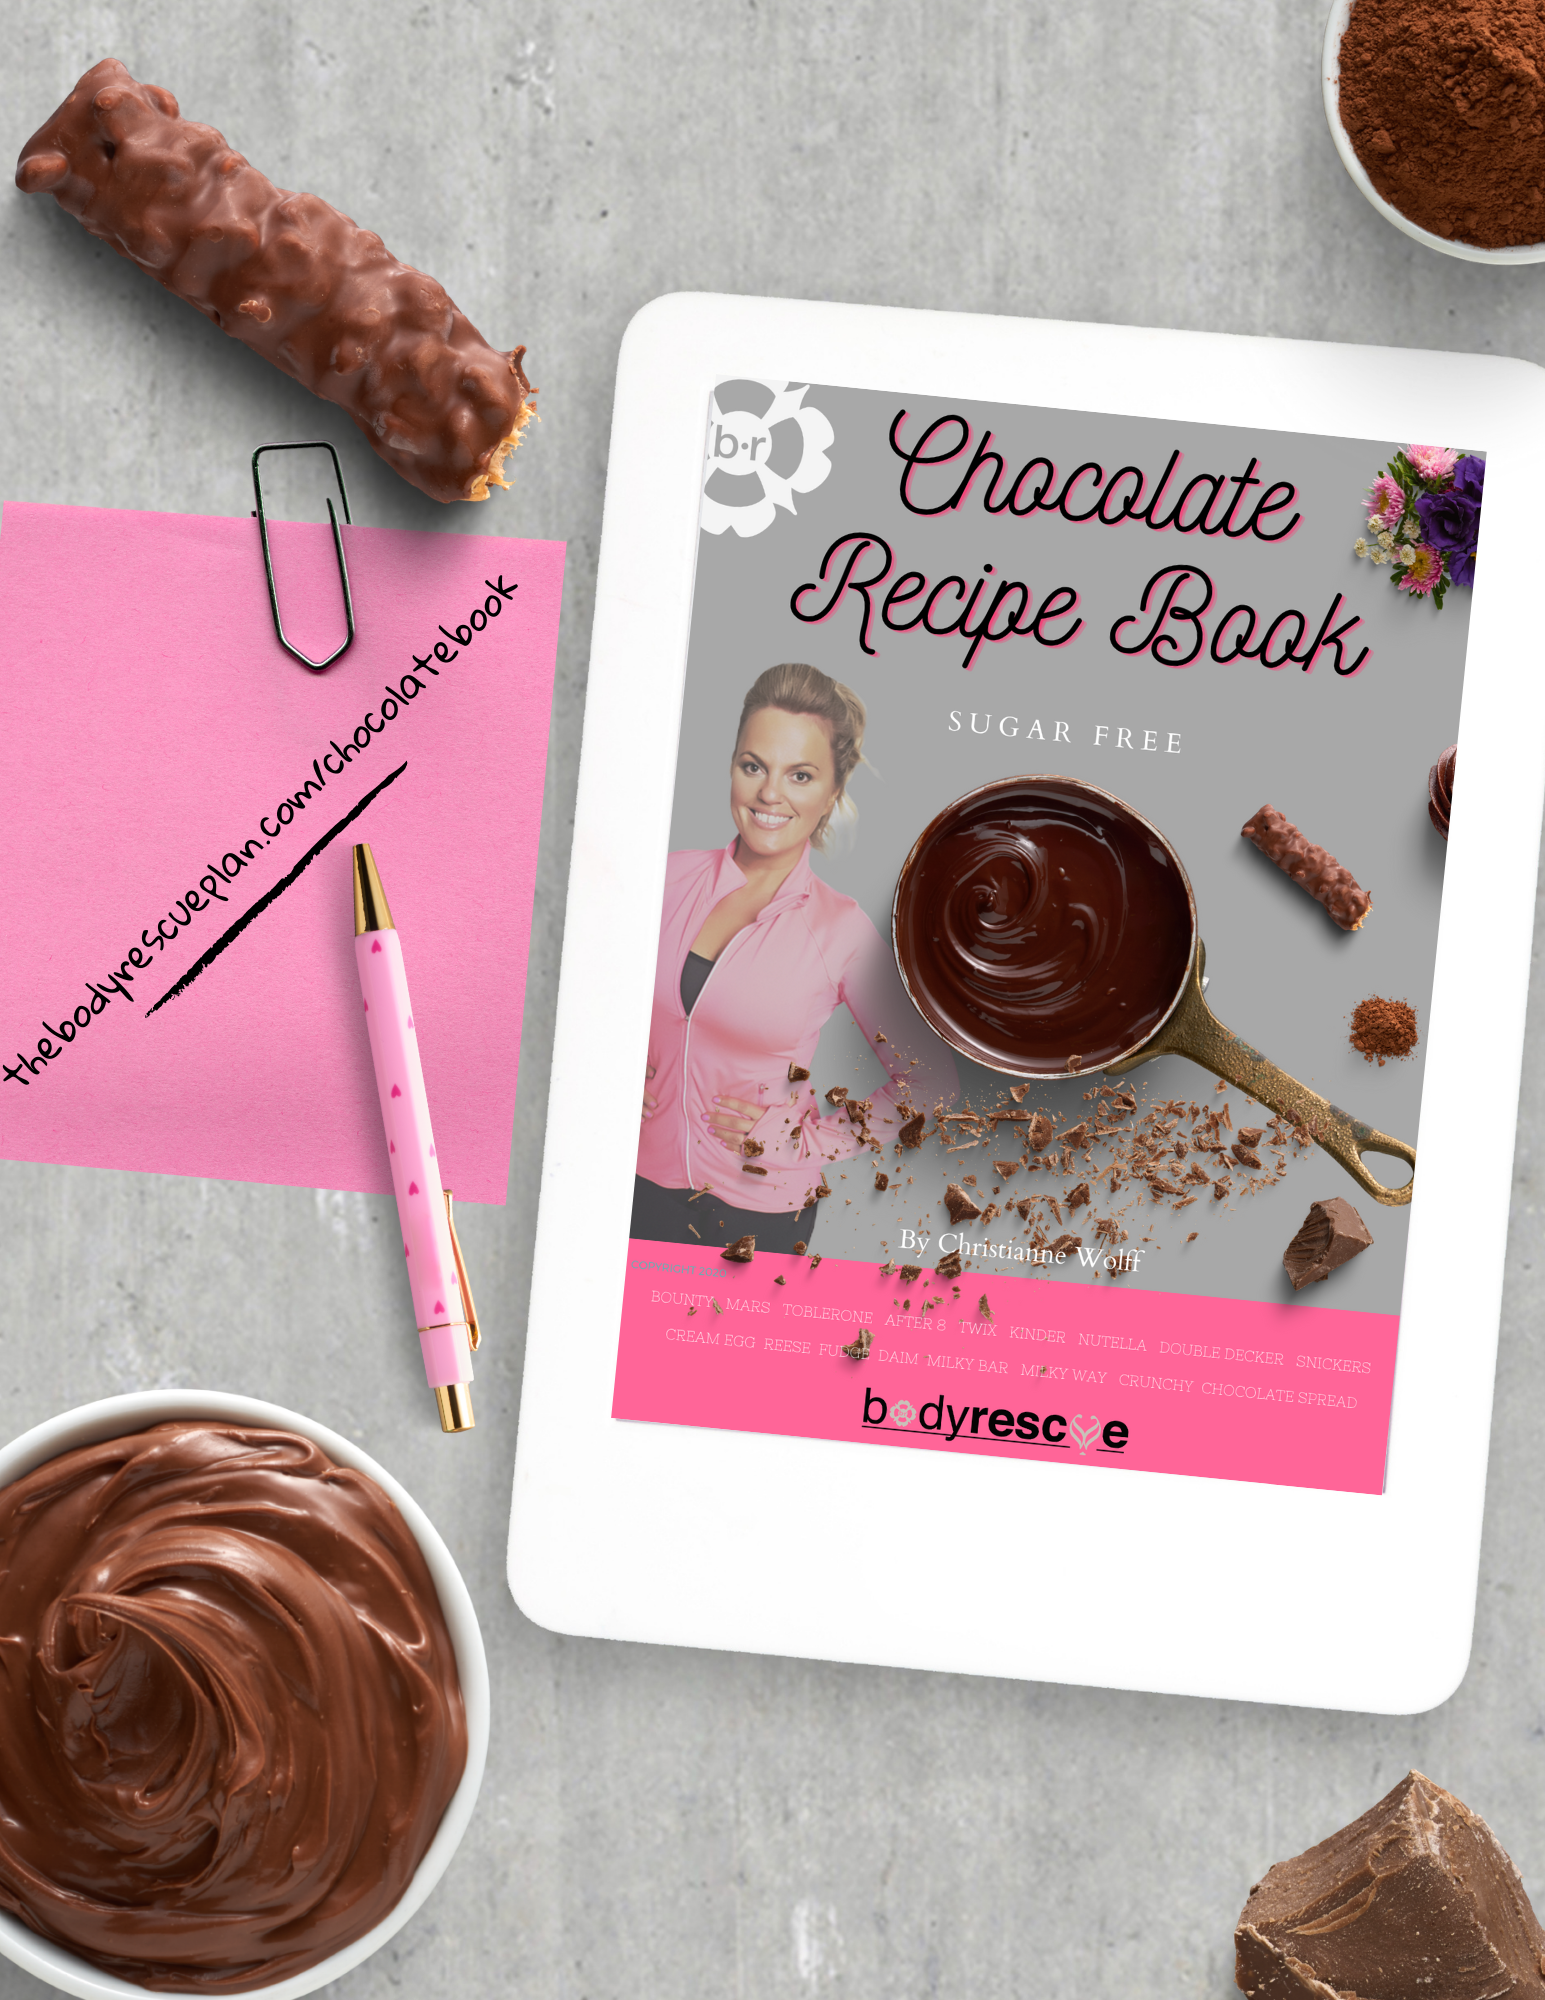 Chocolate workshop manual